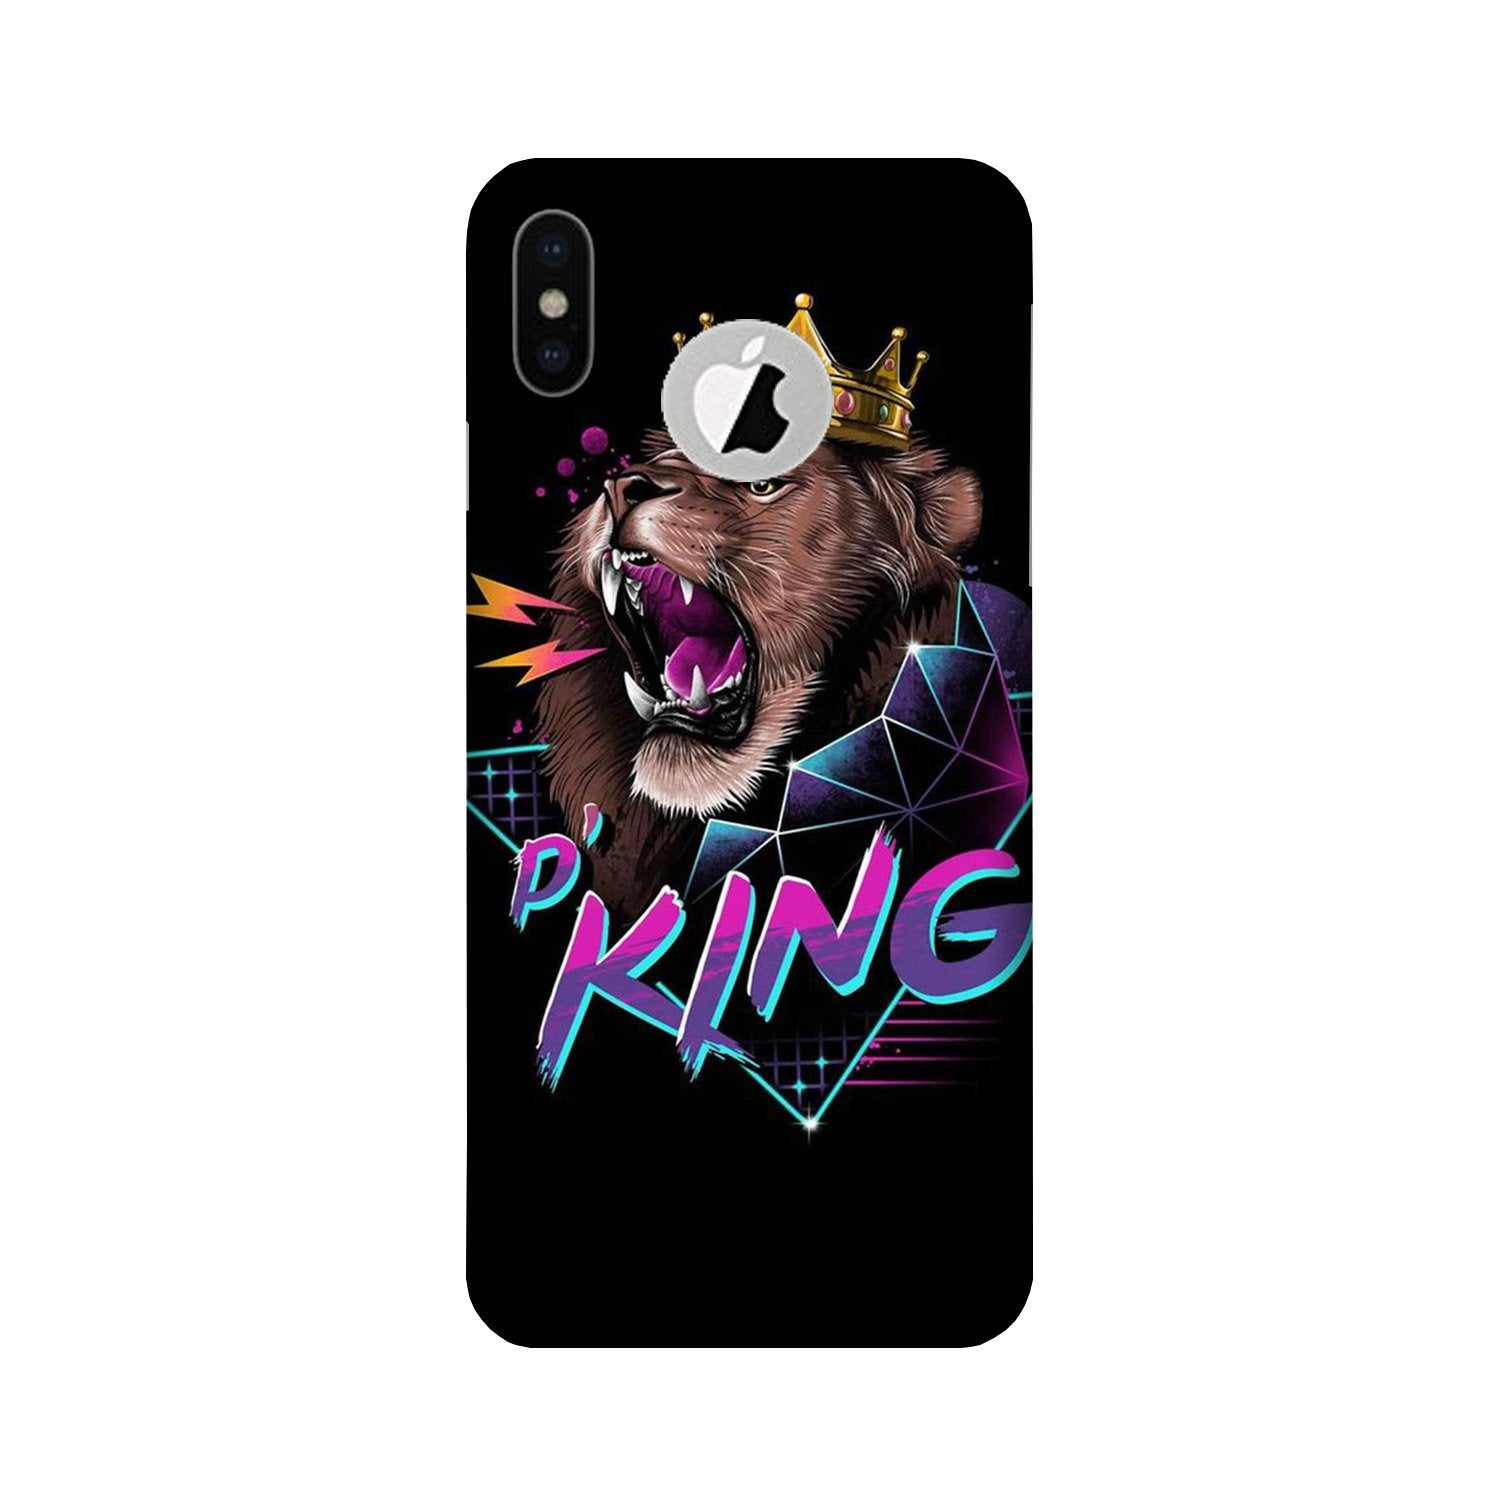 Lion King Case for iPhone X logo cut (Design No. 219)